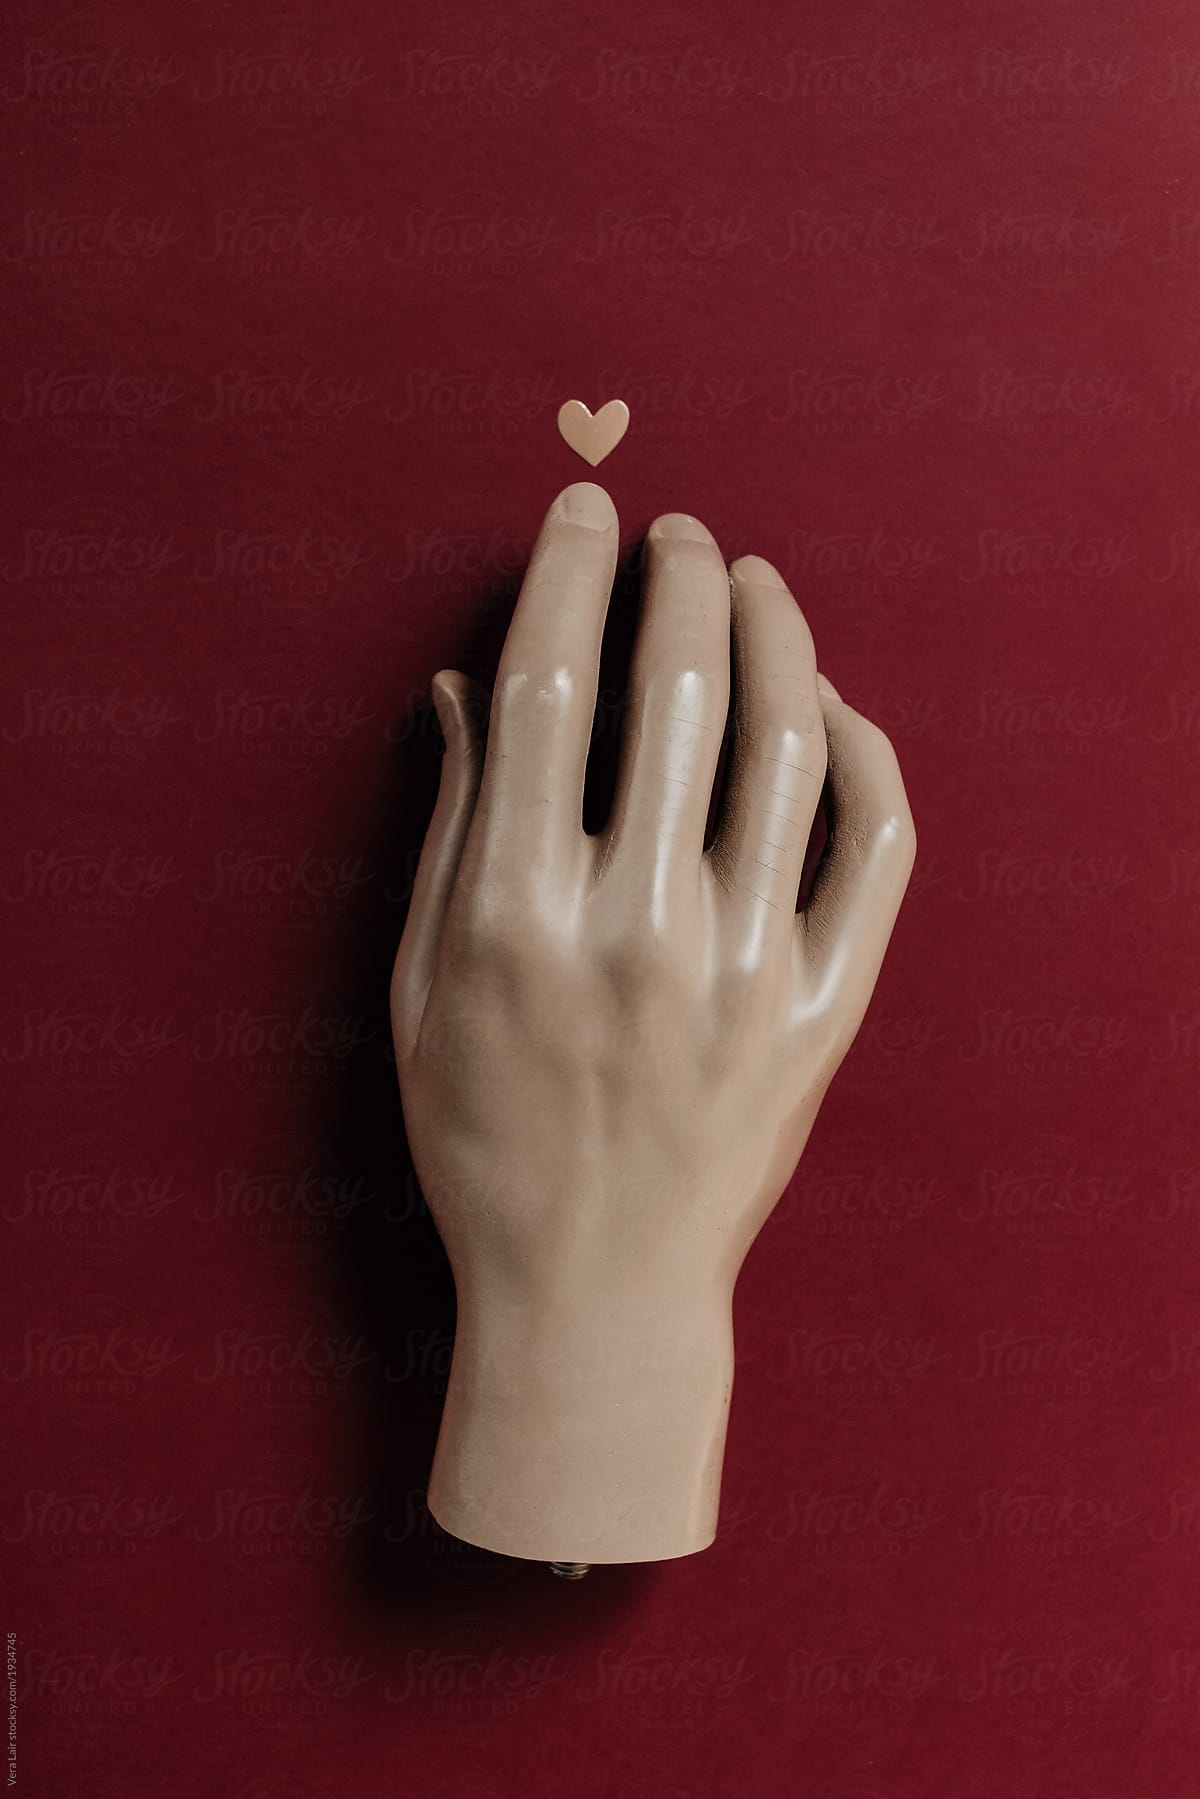 Manikin hand and small golden heart